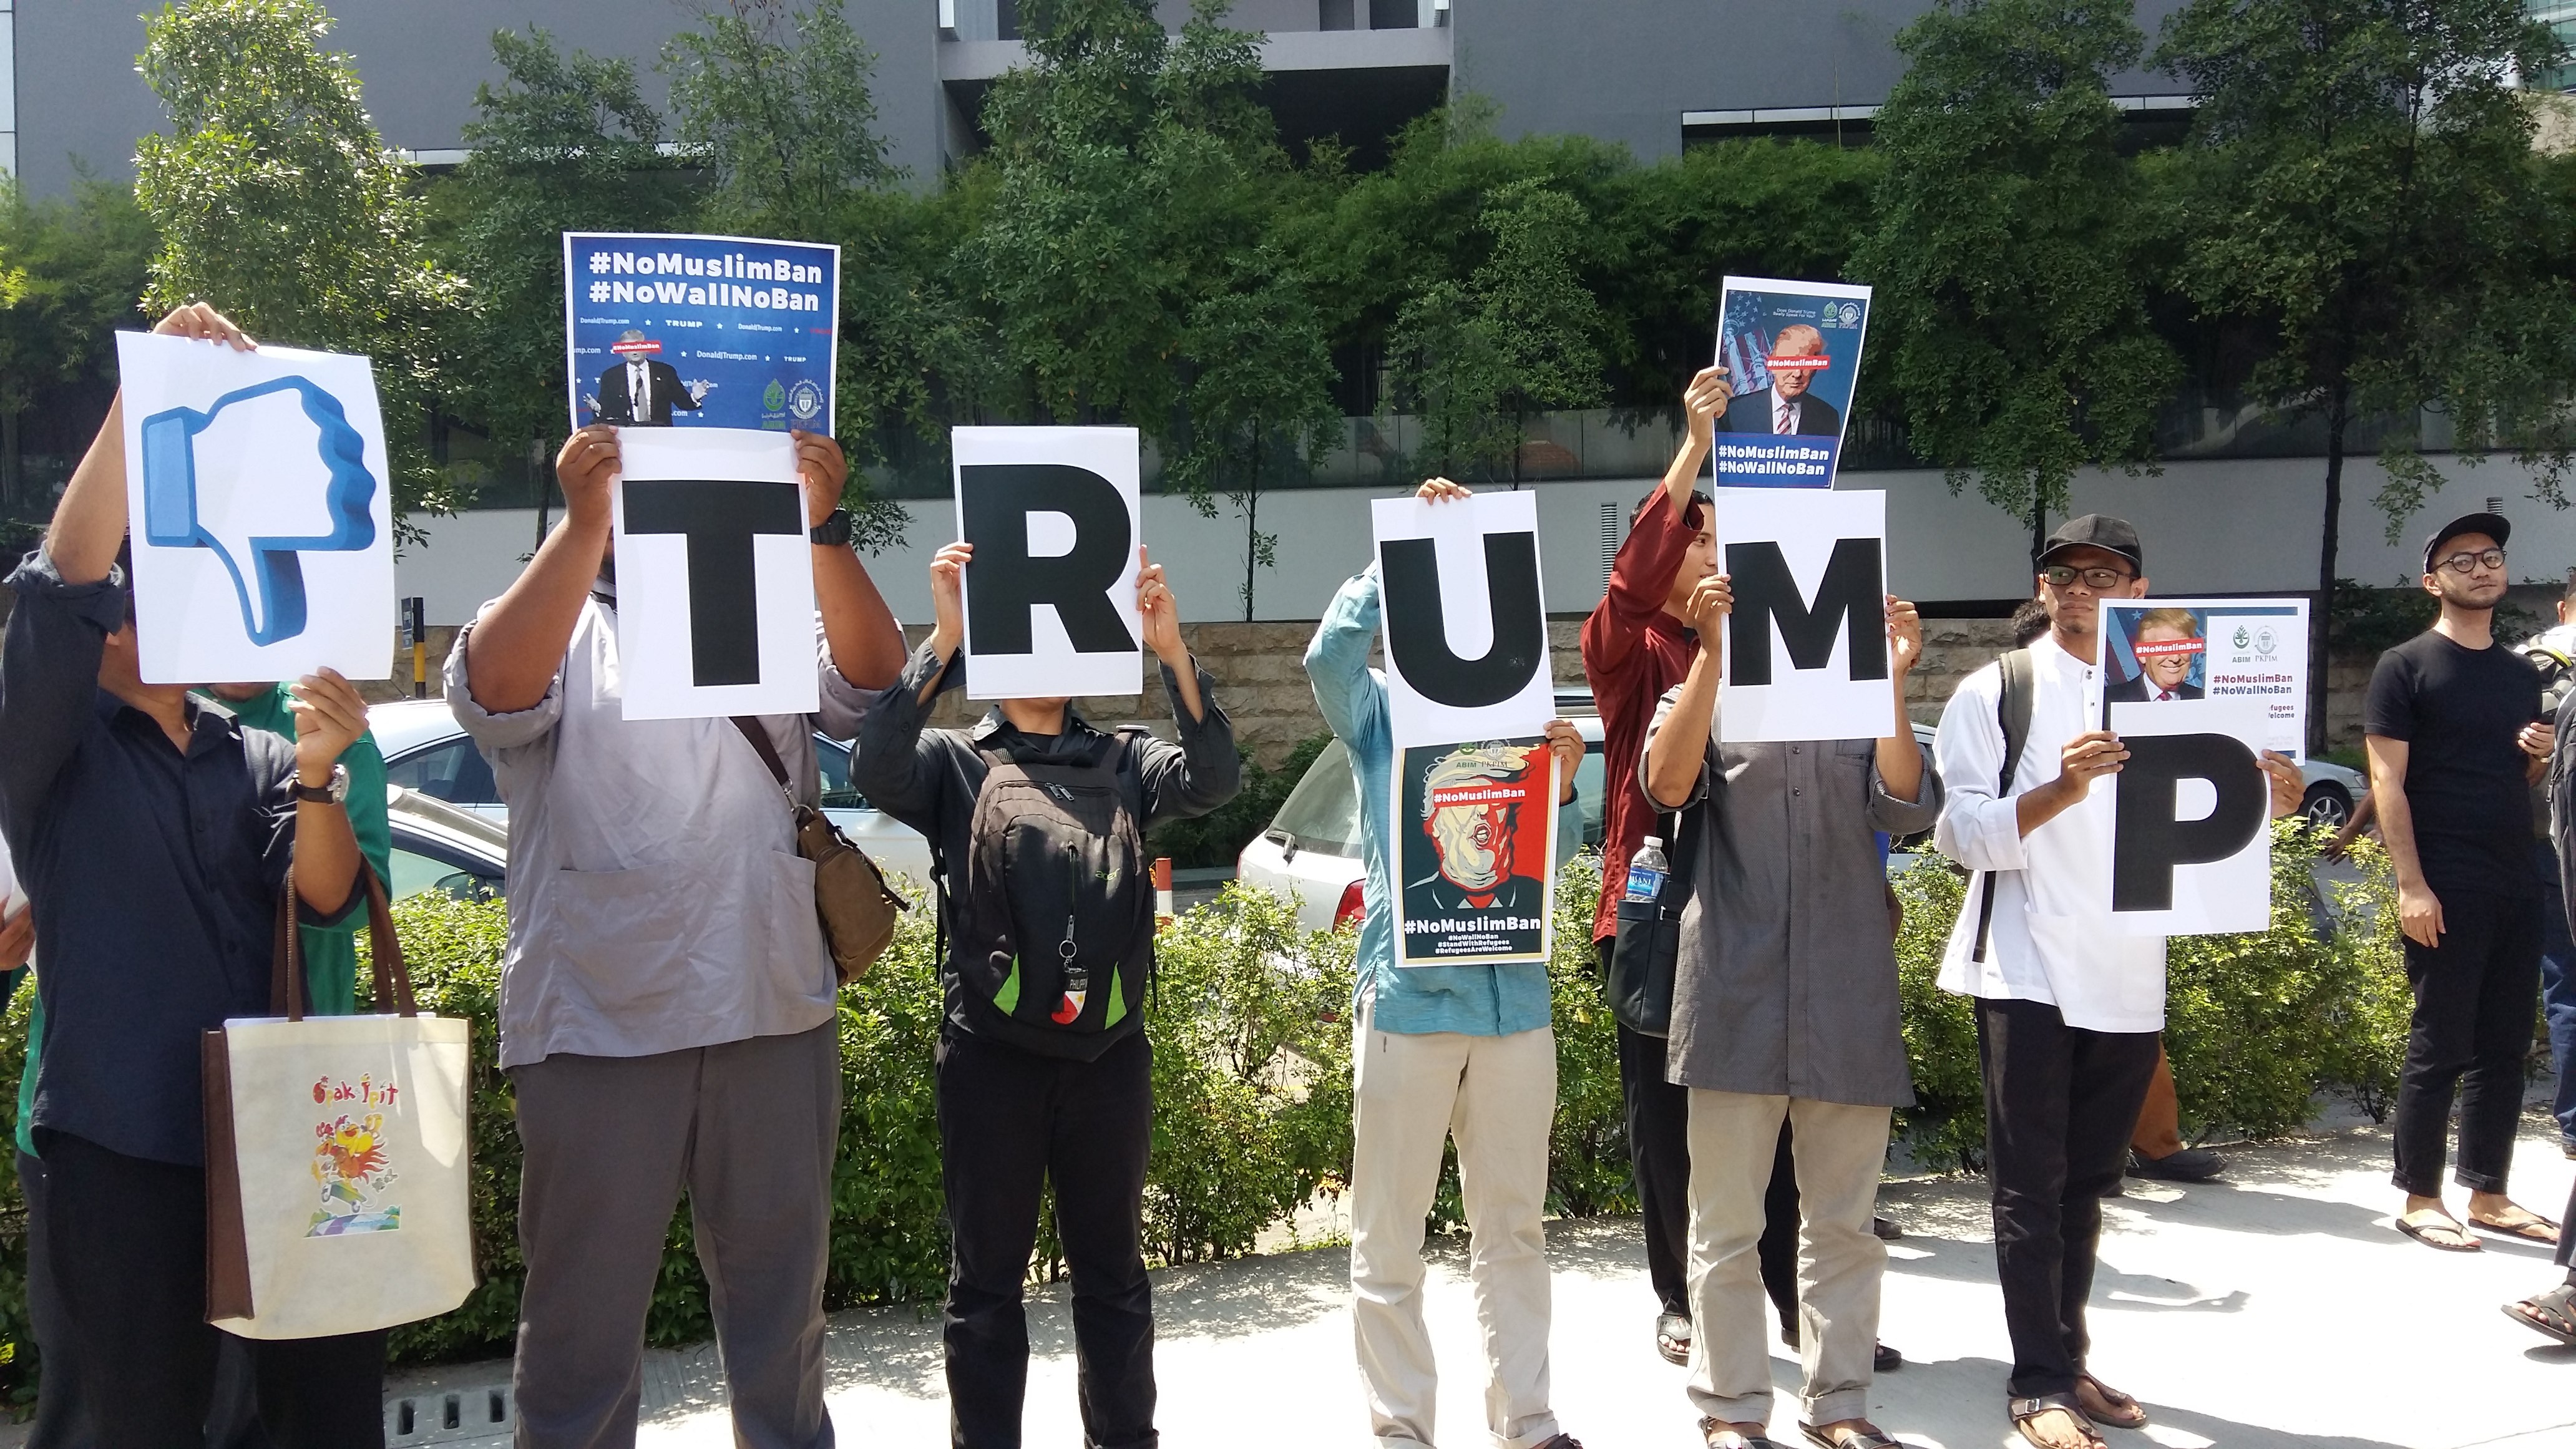 Malaysian students call Trump's #MuslimBan 'breach of human rights', demand justice